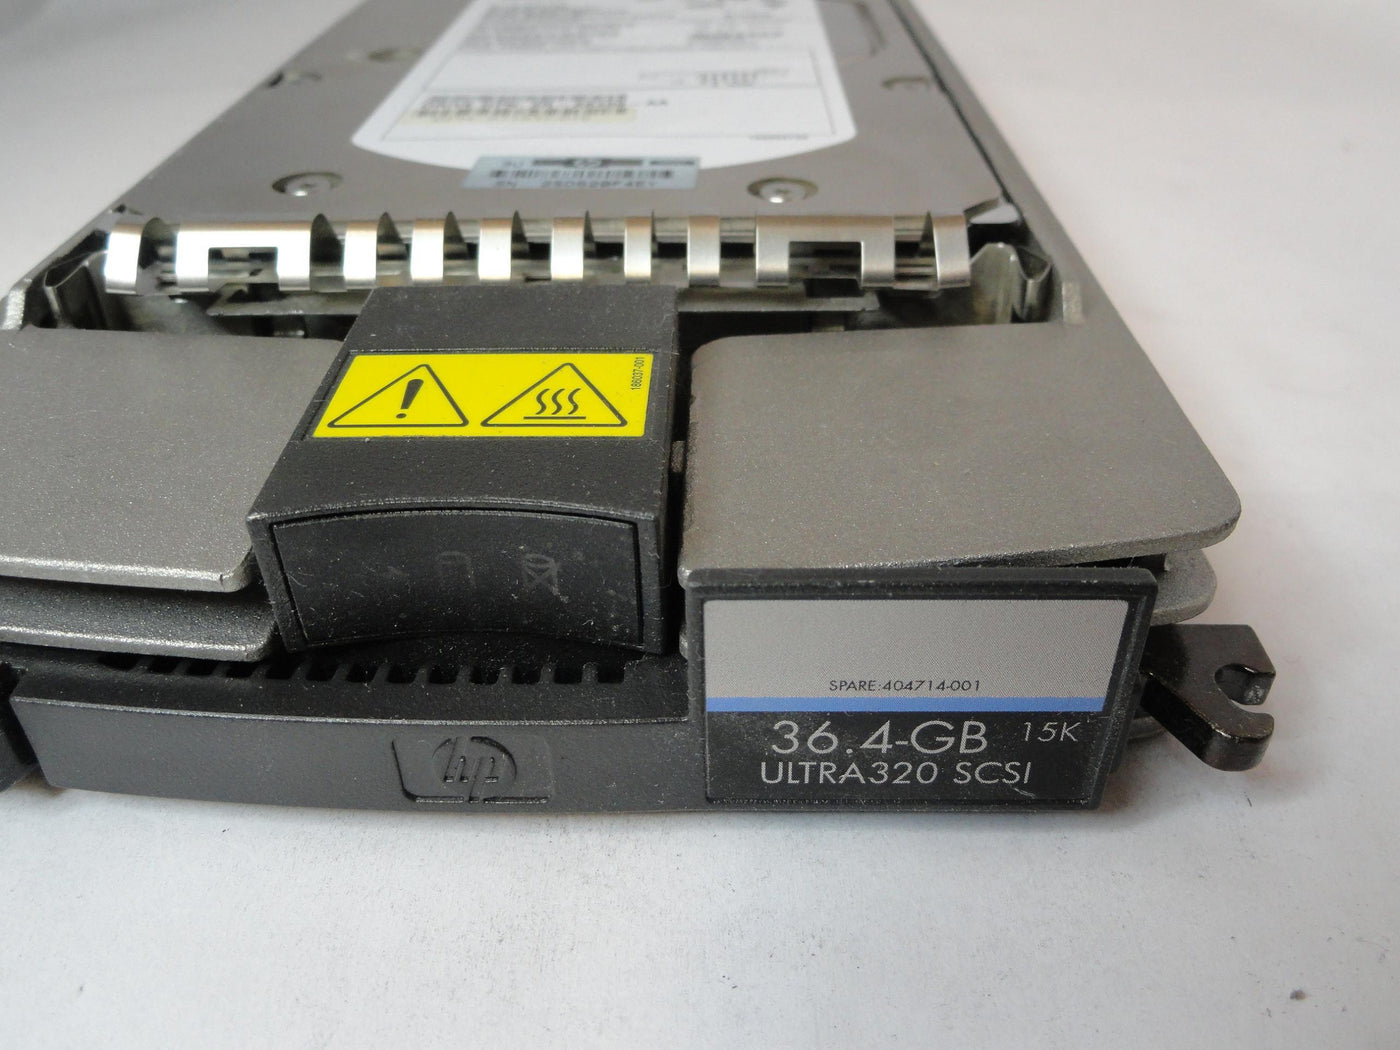 PR21620_9X6006-130_Seagate HP 36.4GB SCSI 80 Pin 15Krpm 3.5in HDD - Image4